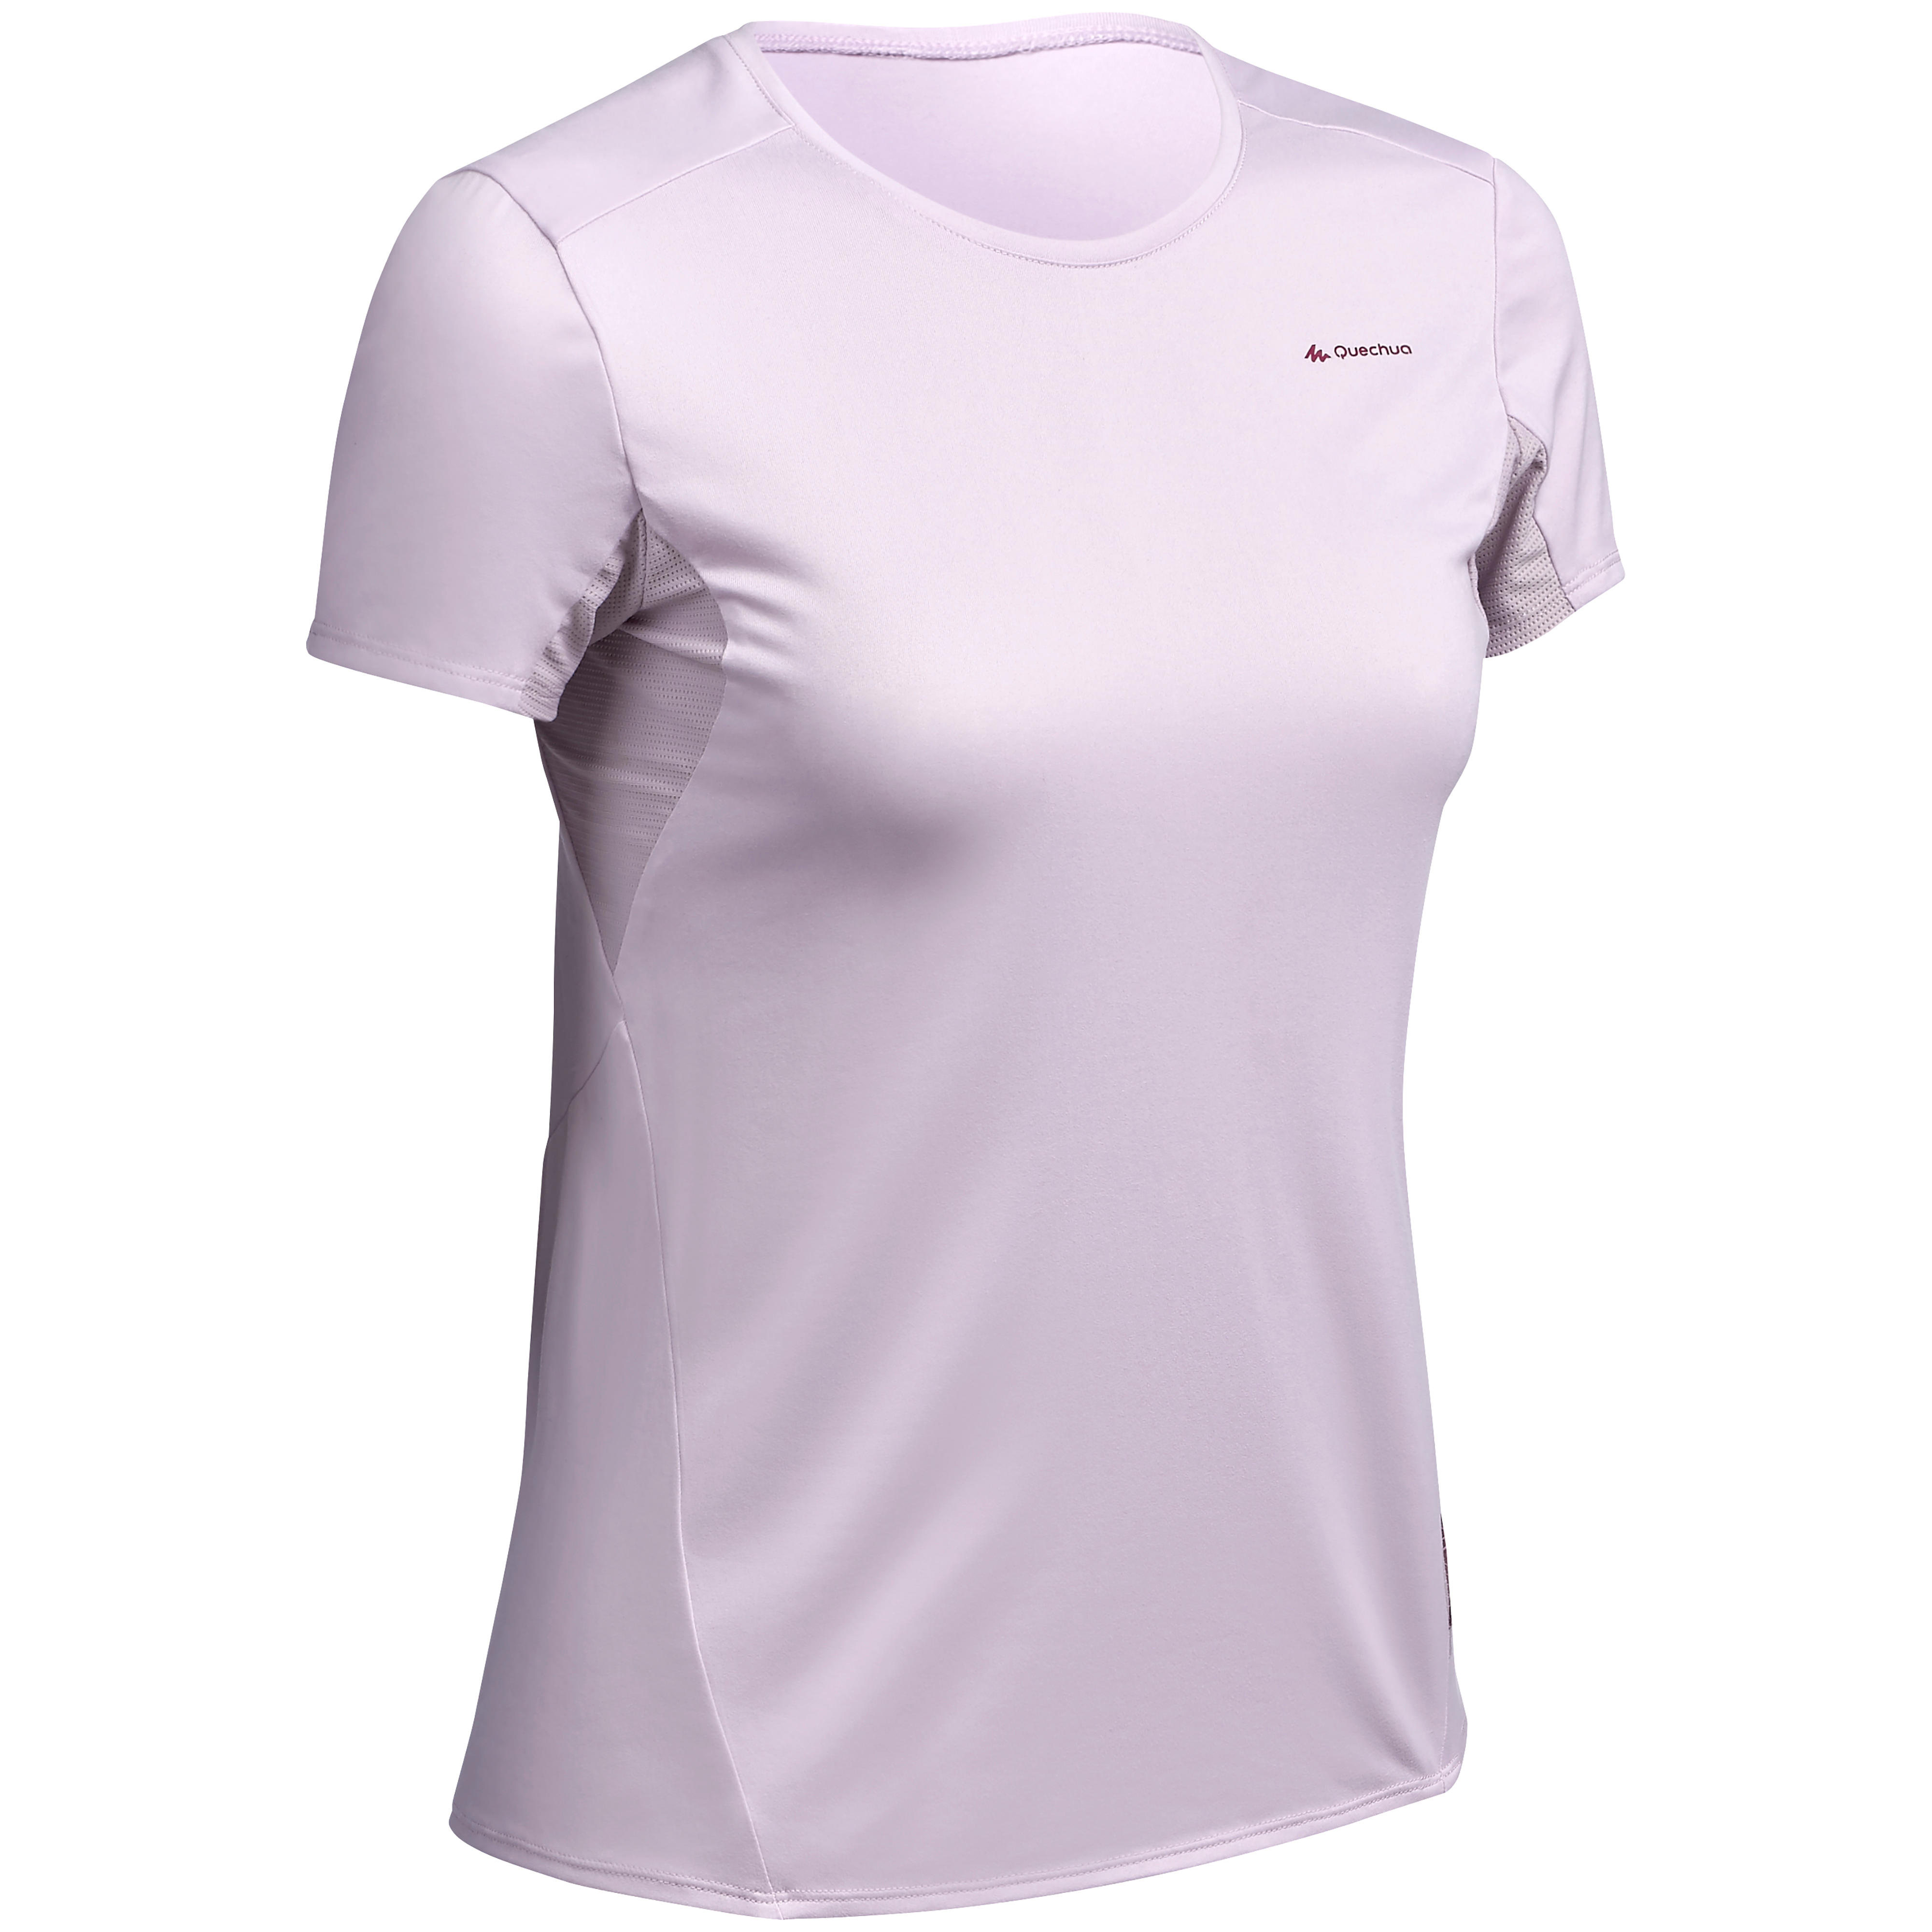 correcto Civilizar Gran engaño Camisetas Fluorescentes Decathlon Online Shop, UP TO 61% OFF |  agrichembio.com